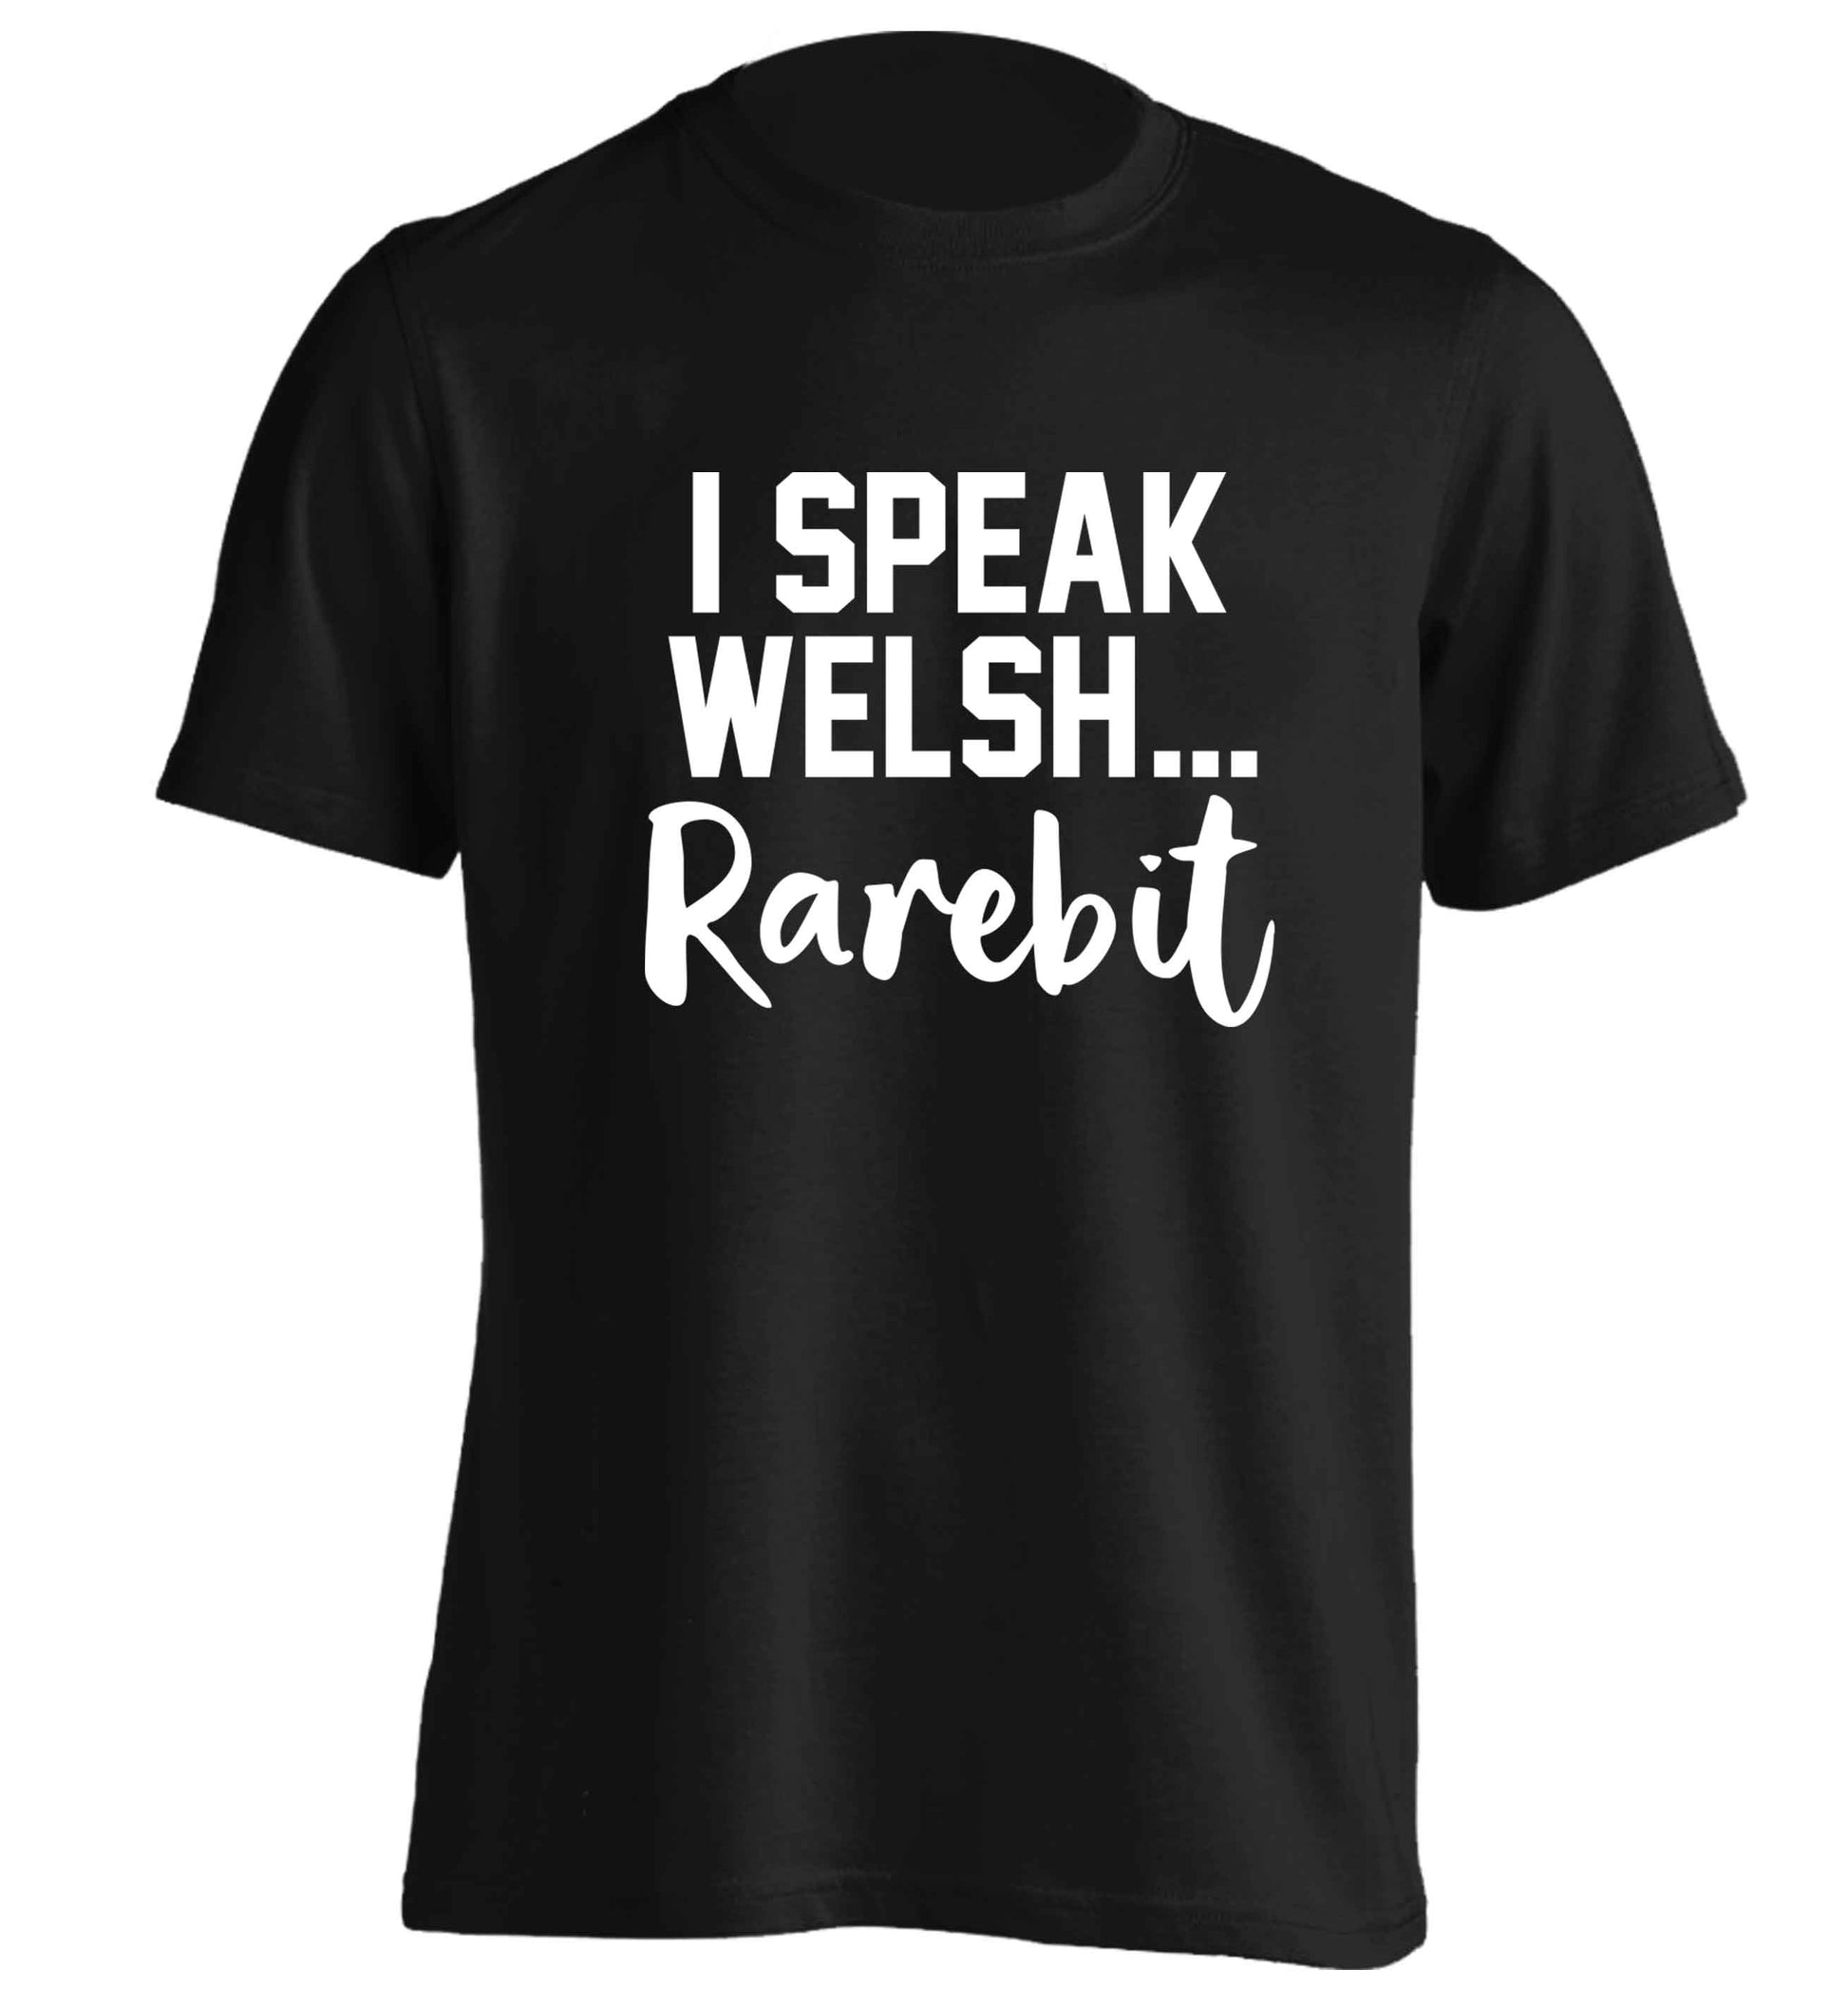 I speak Welsh...rarebit adults unisex black Tshirt 2XL